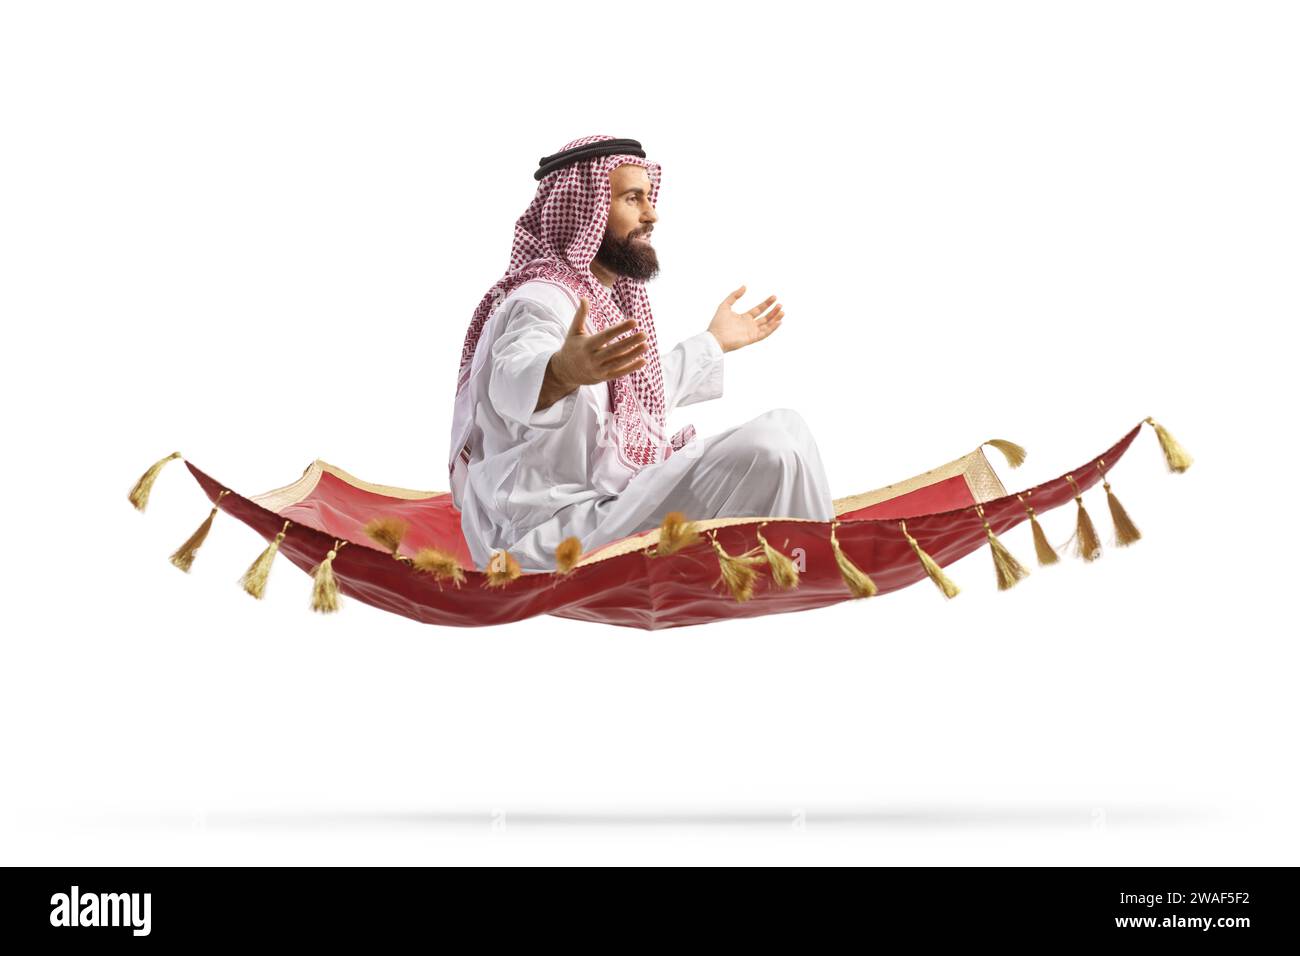 Saudi arab man sitting on a magic carpet and flying isolated on white background Stock Photo